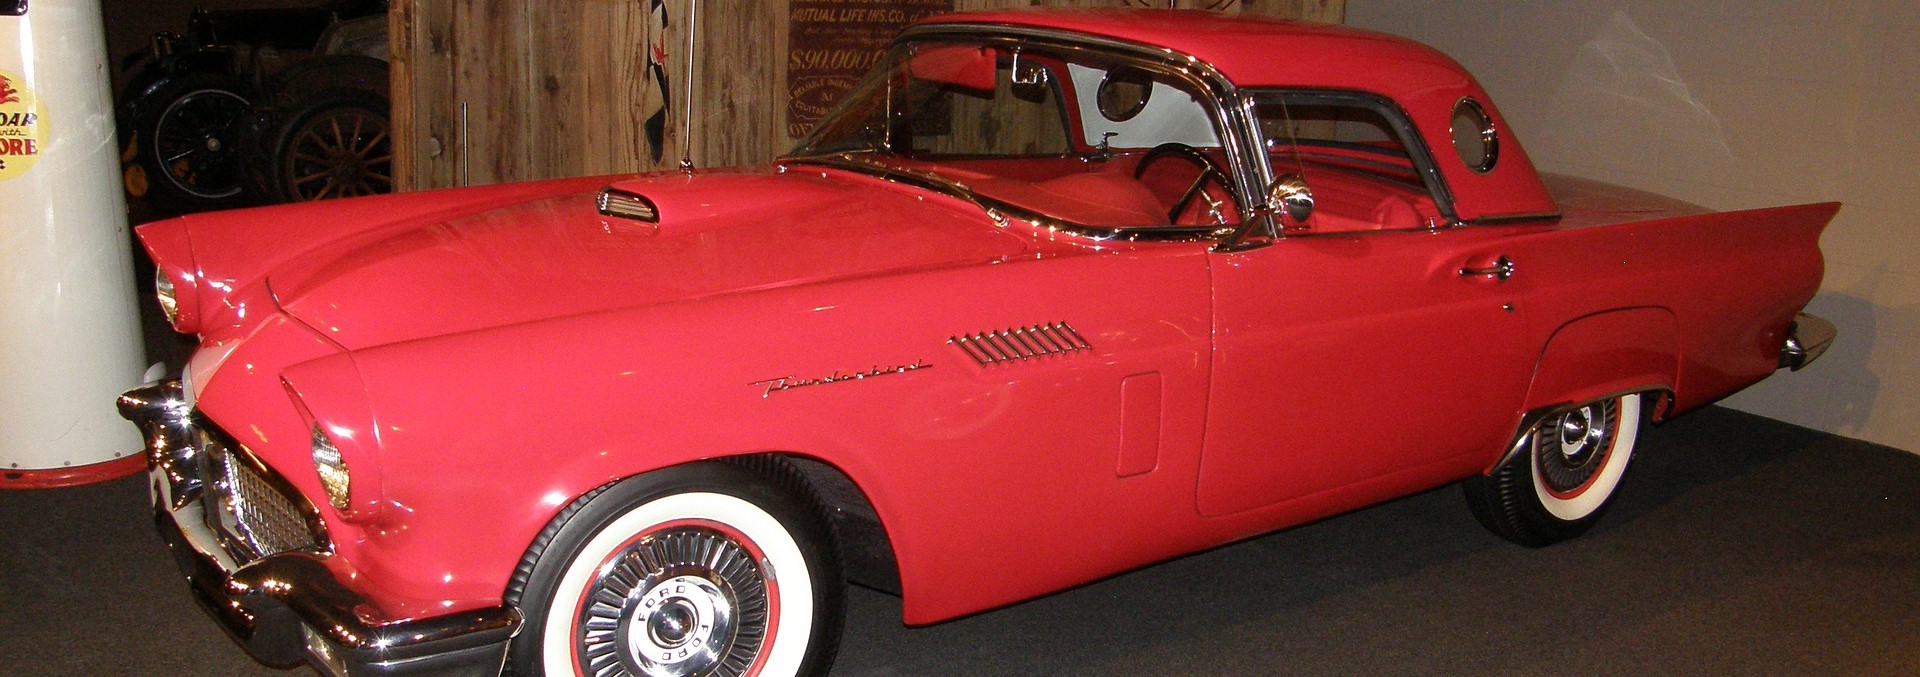 Classic Thunderbird in Columbus, Georgia | Breast Cancer Car Donations